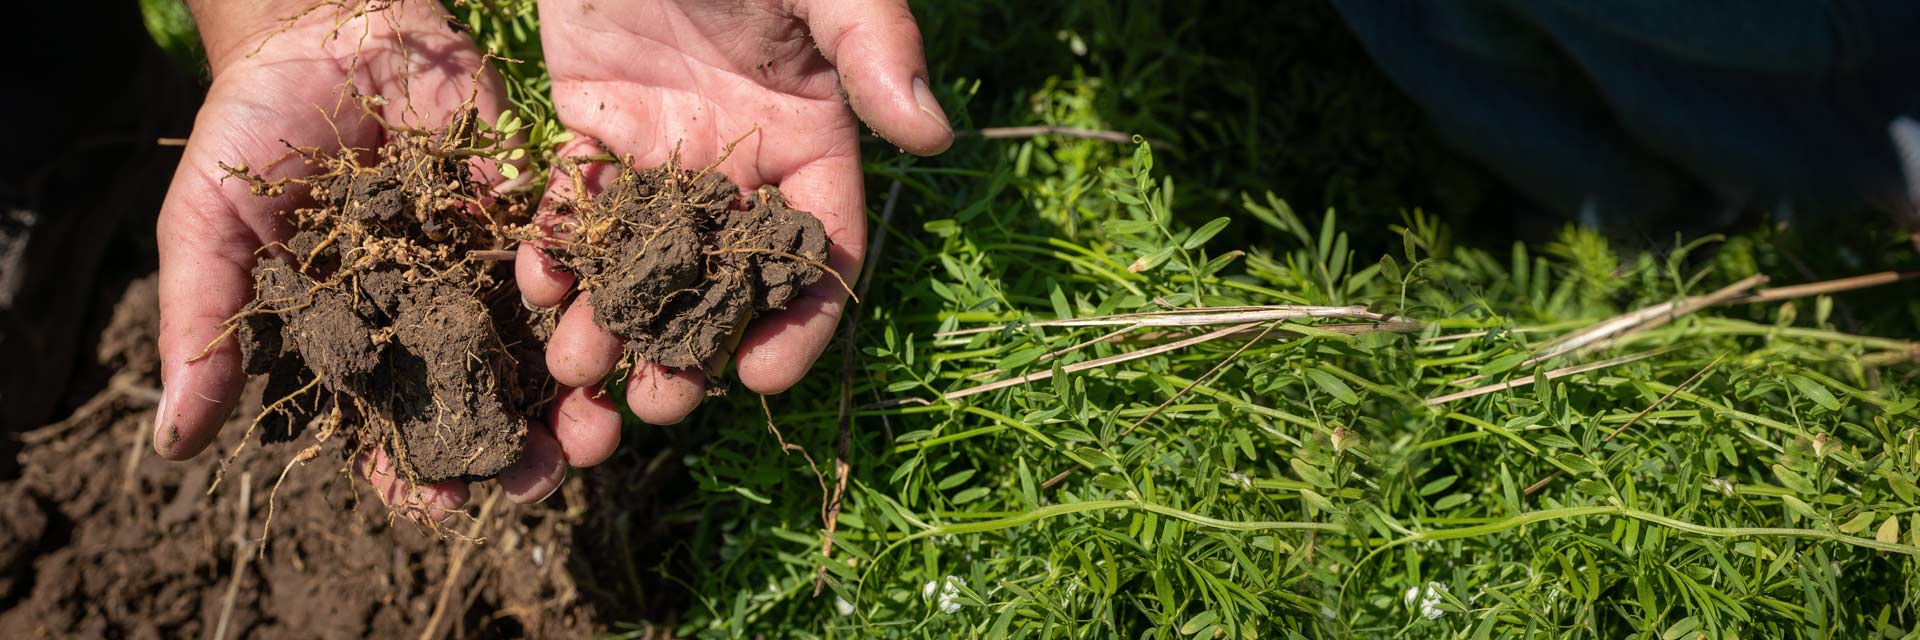 Mycorrhizae to stimulate soil’s biology